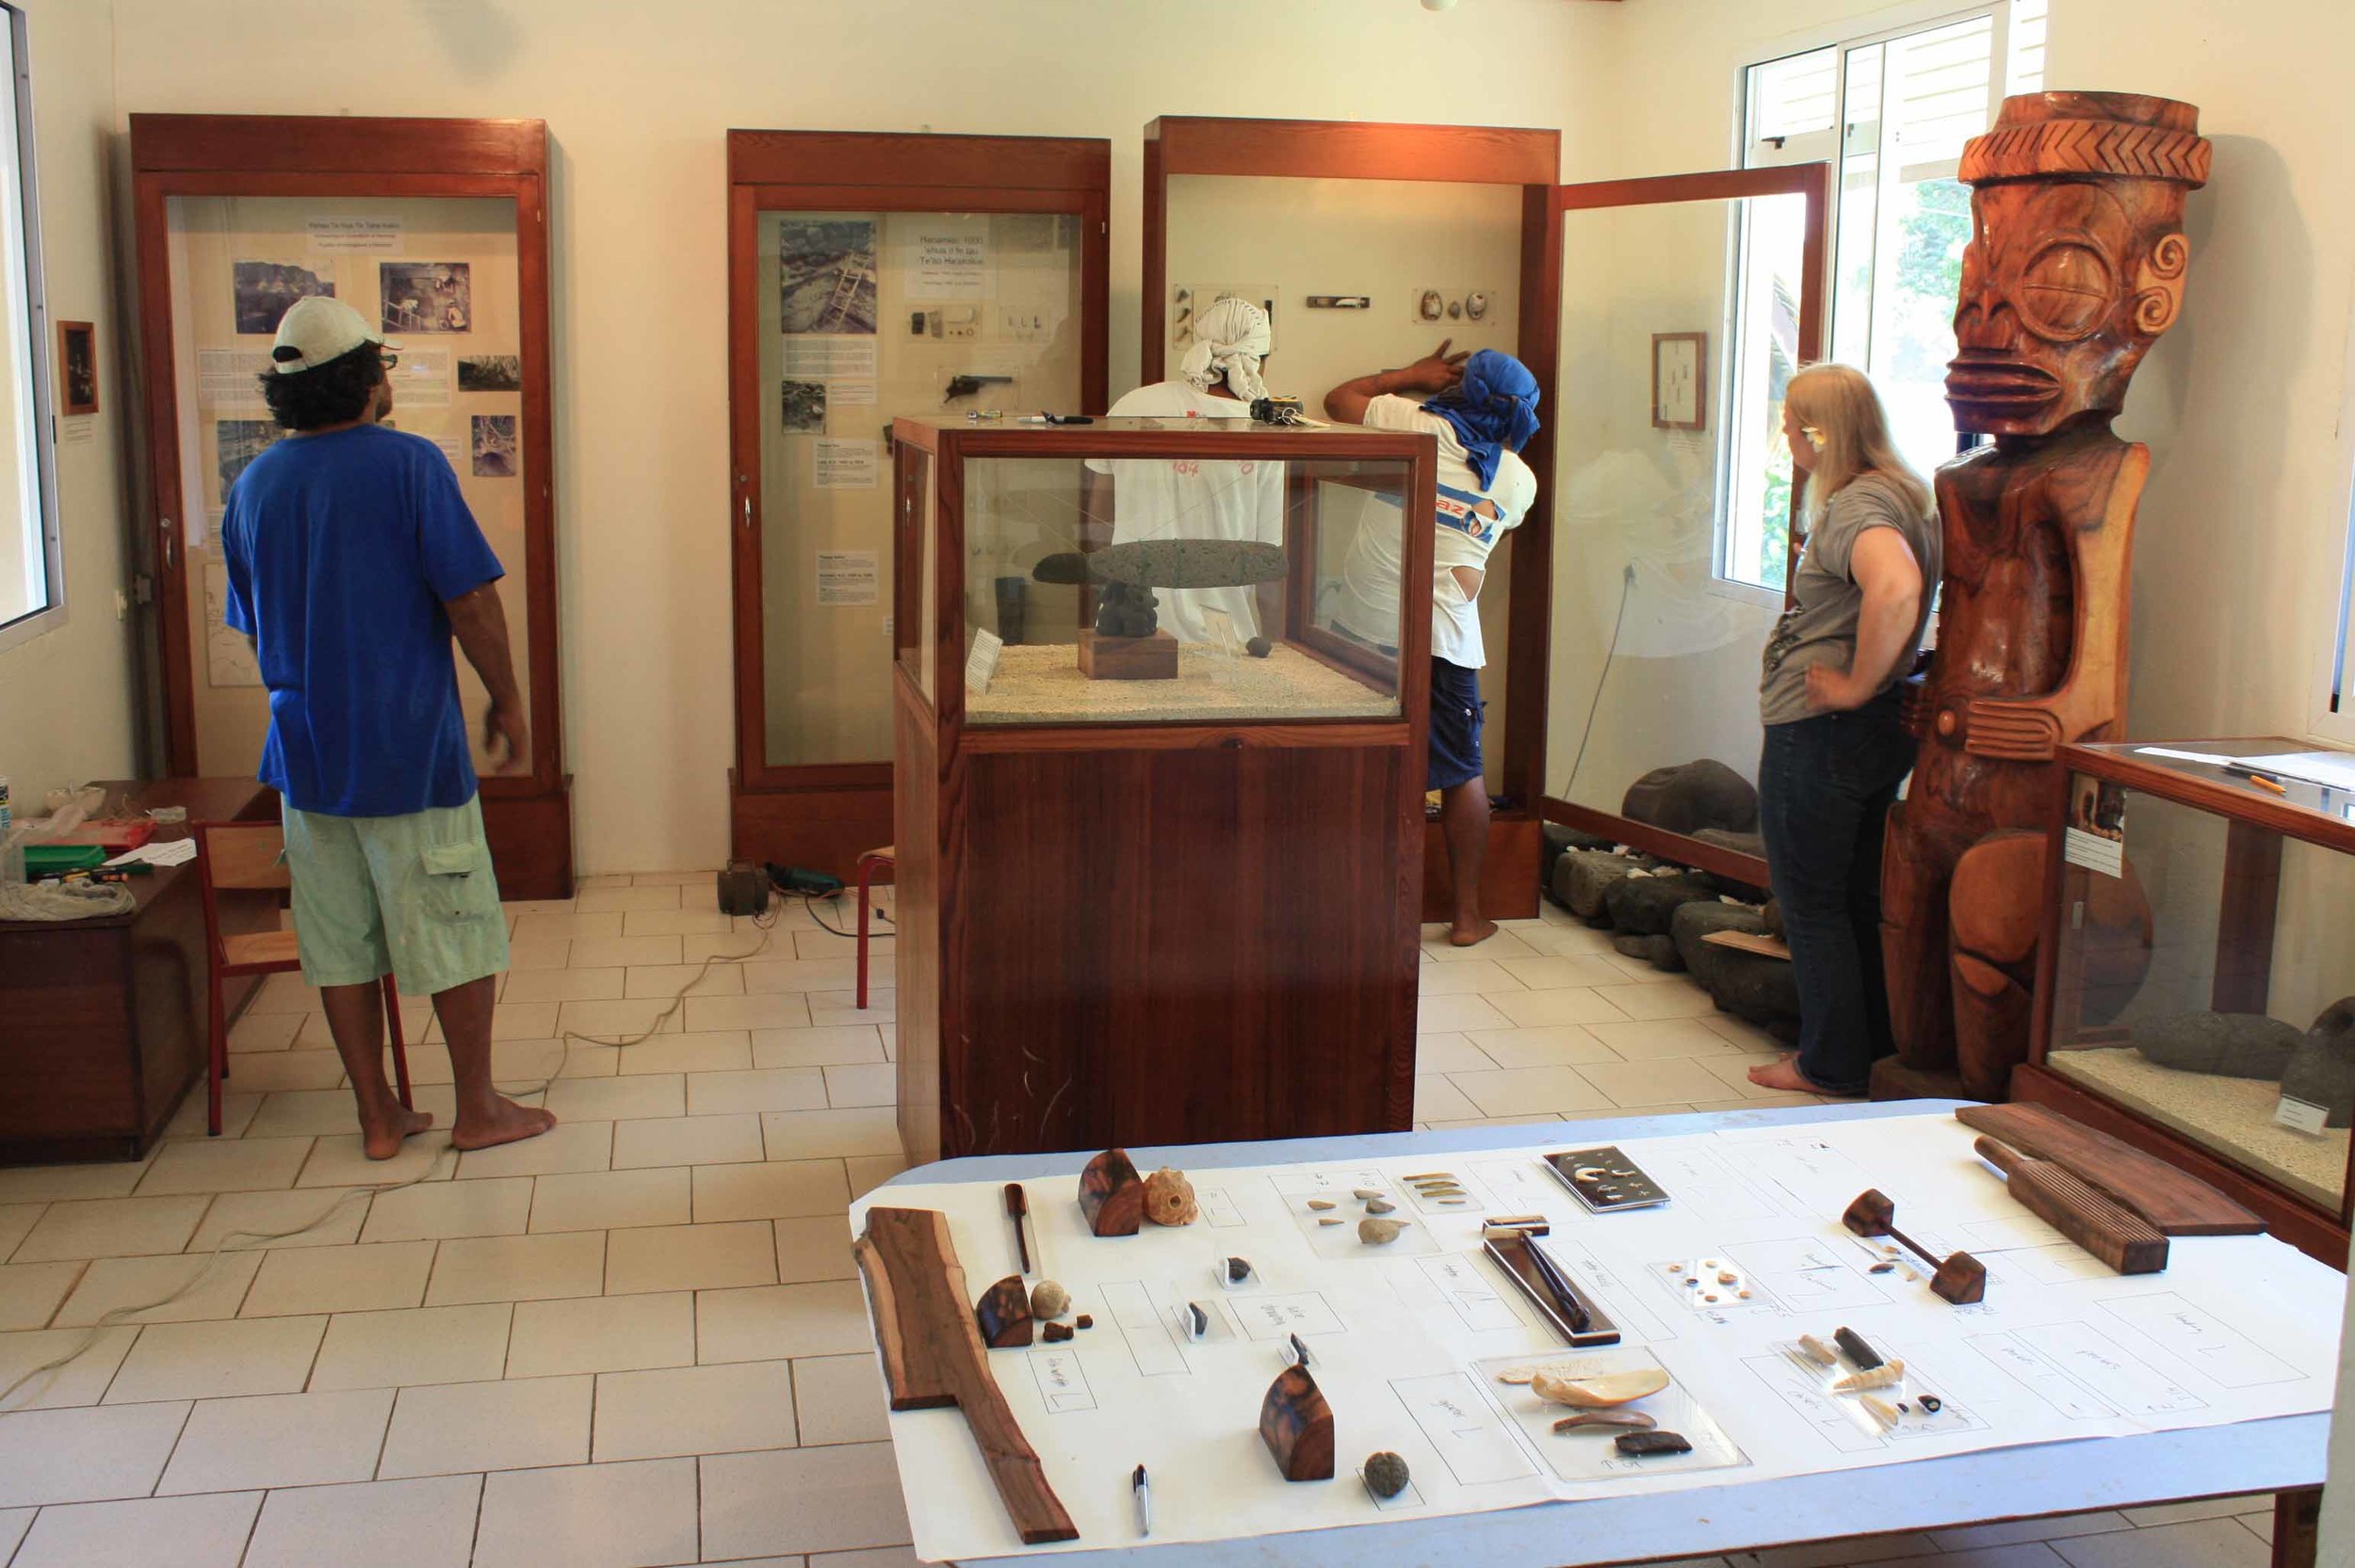 2013. Mounting the "treasures of Tahuata" exhibit. In action: Manuhi Timau,Samuel Tiaiho, Hio Timau and Maryjane Sherwin. (Copy)